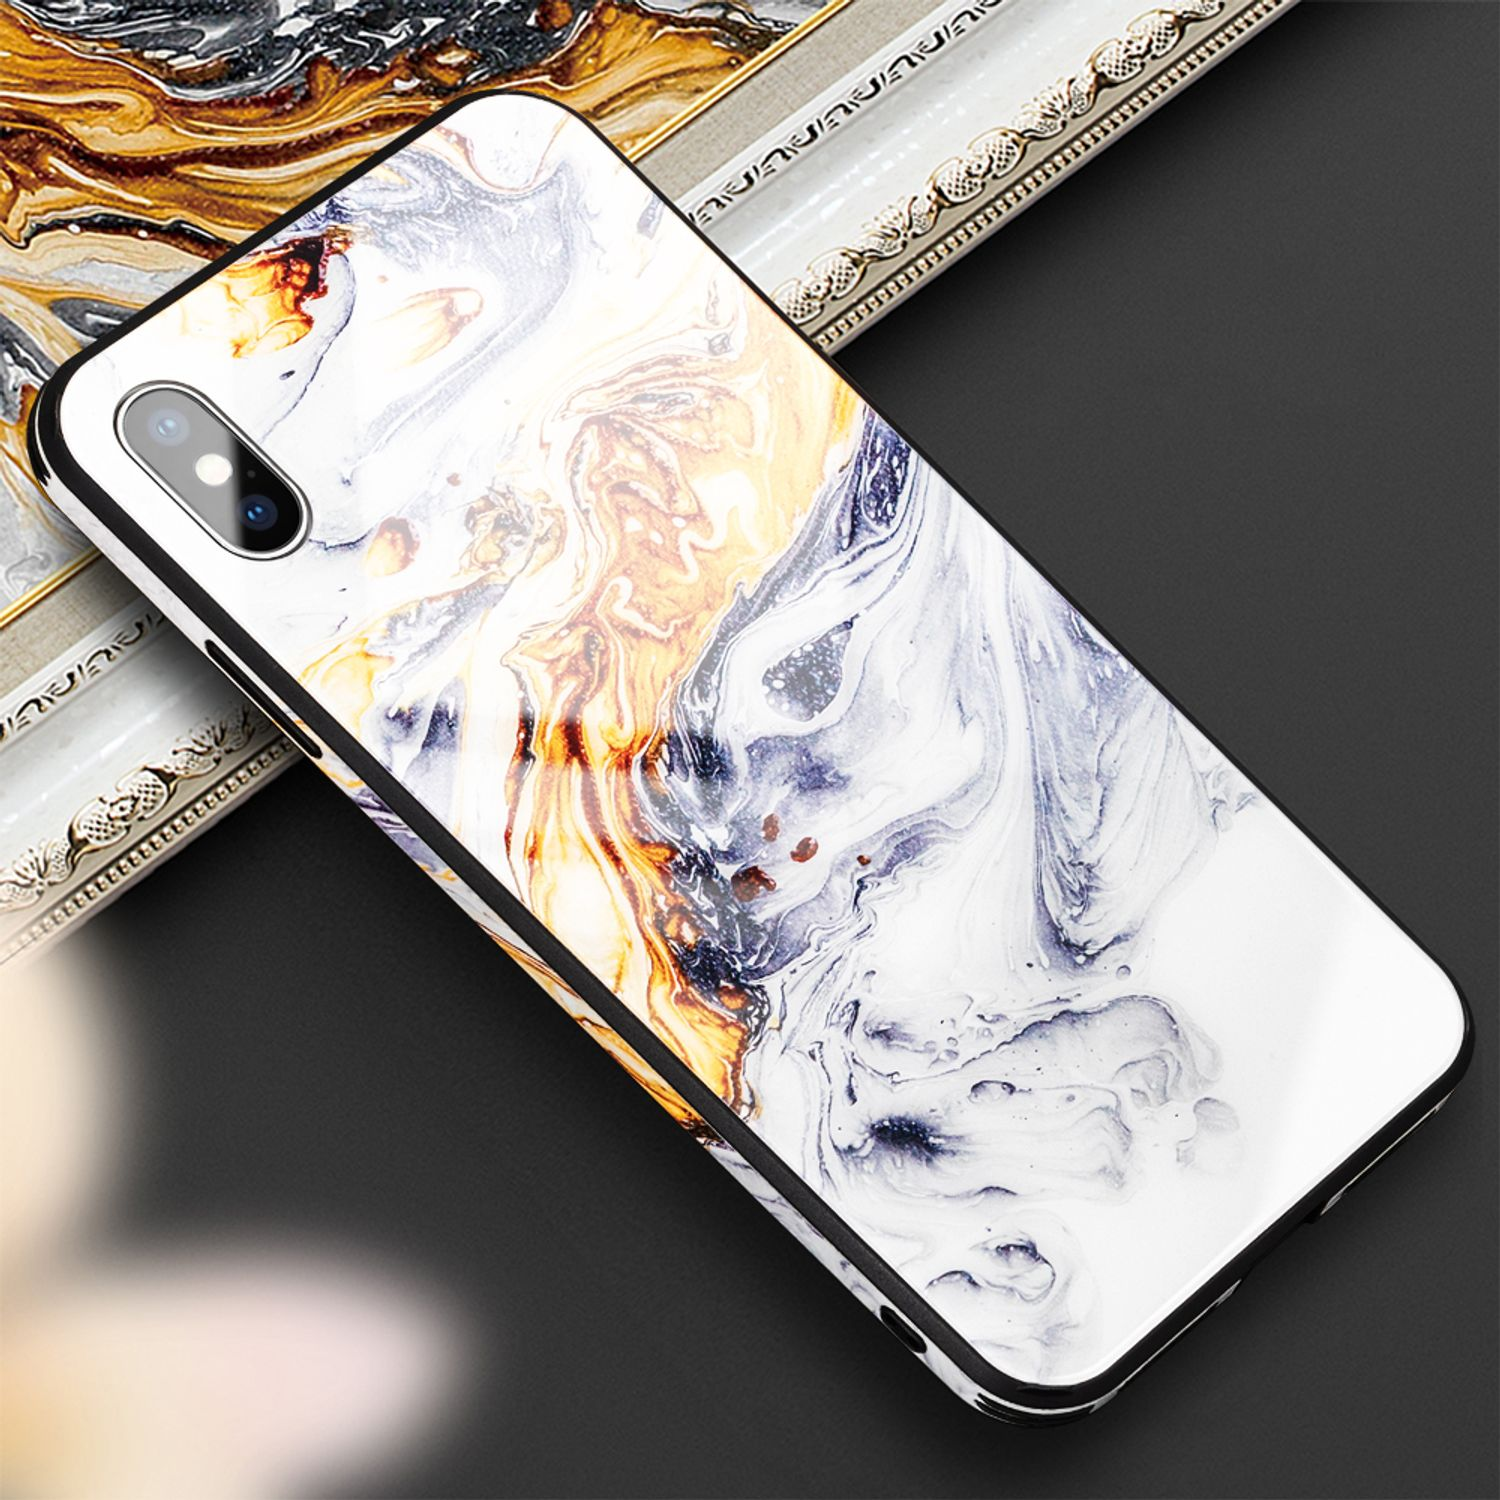 Hartglas iPhone XS, Grau Backcover, Hülle, NALIA Apple, Marmor-Look iPhone X